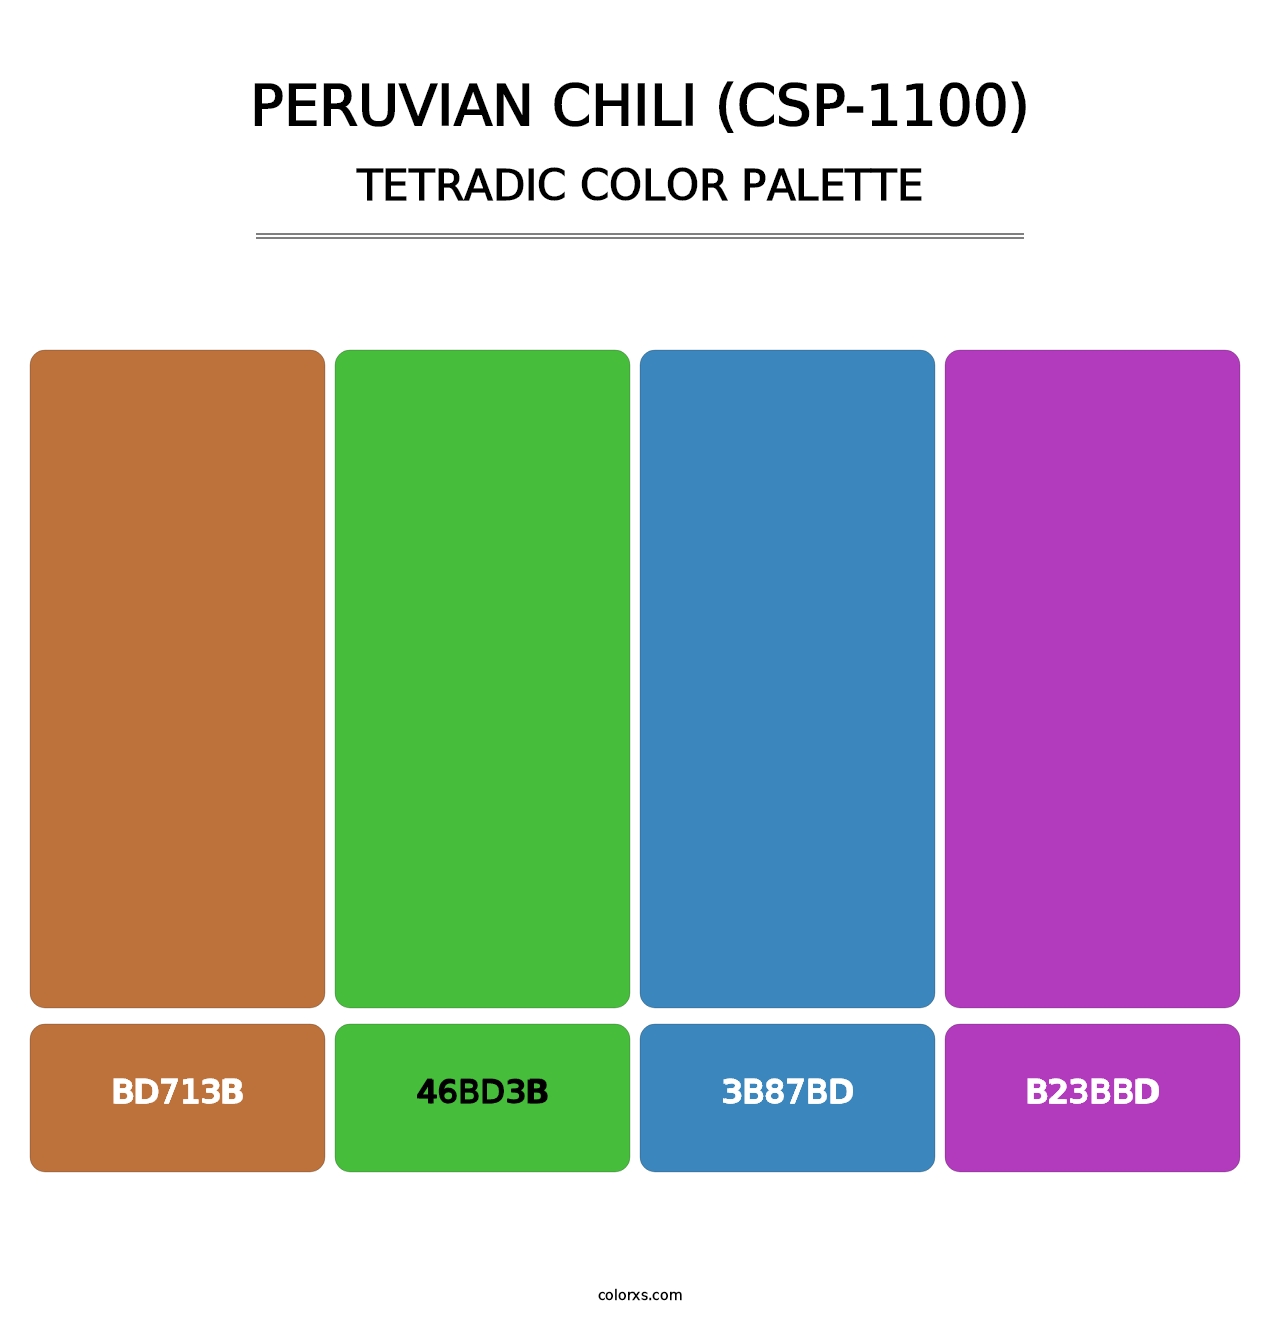 Peruvian Chili (CSP-1100) - Tetradic Color Palette